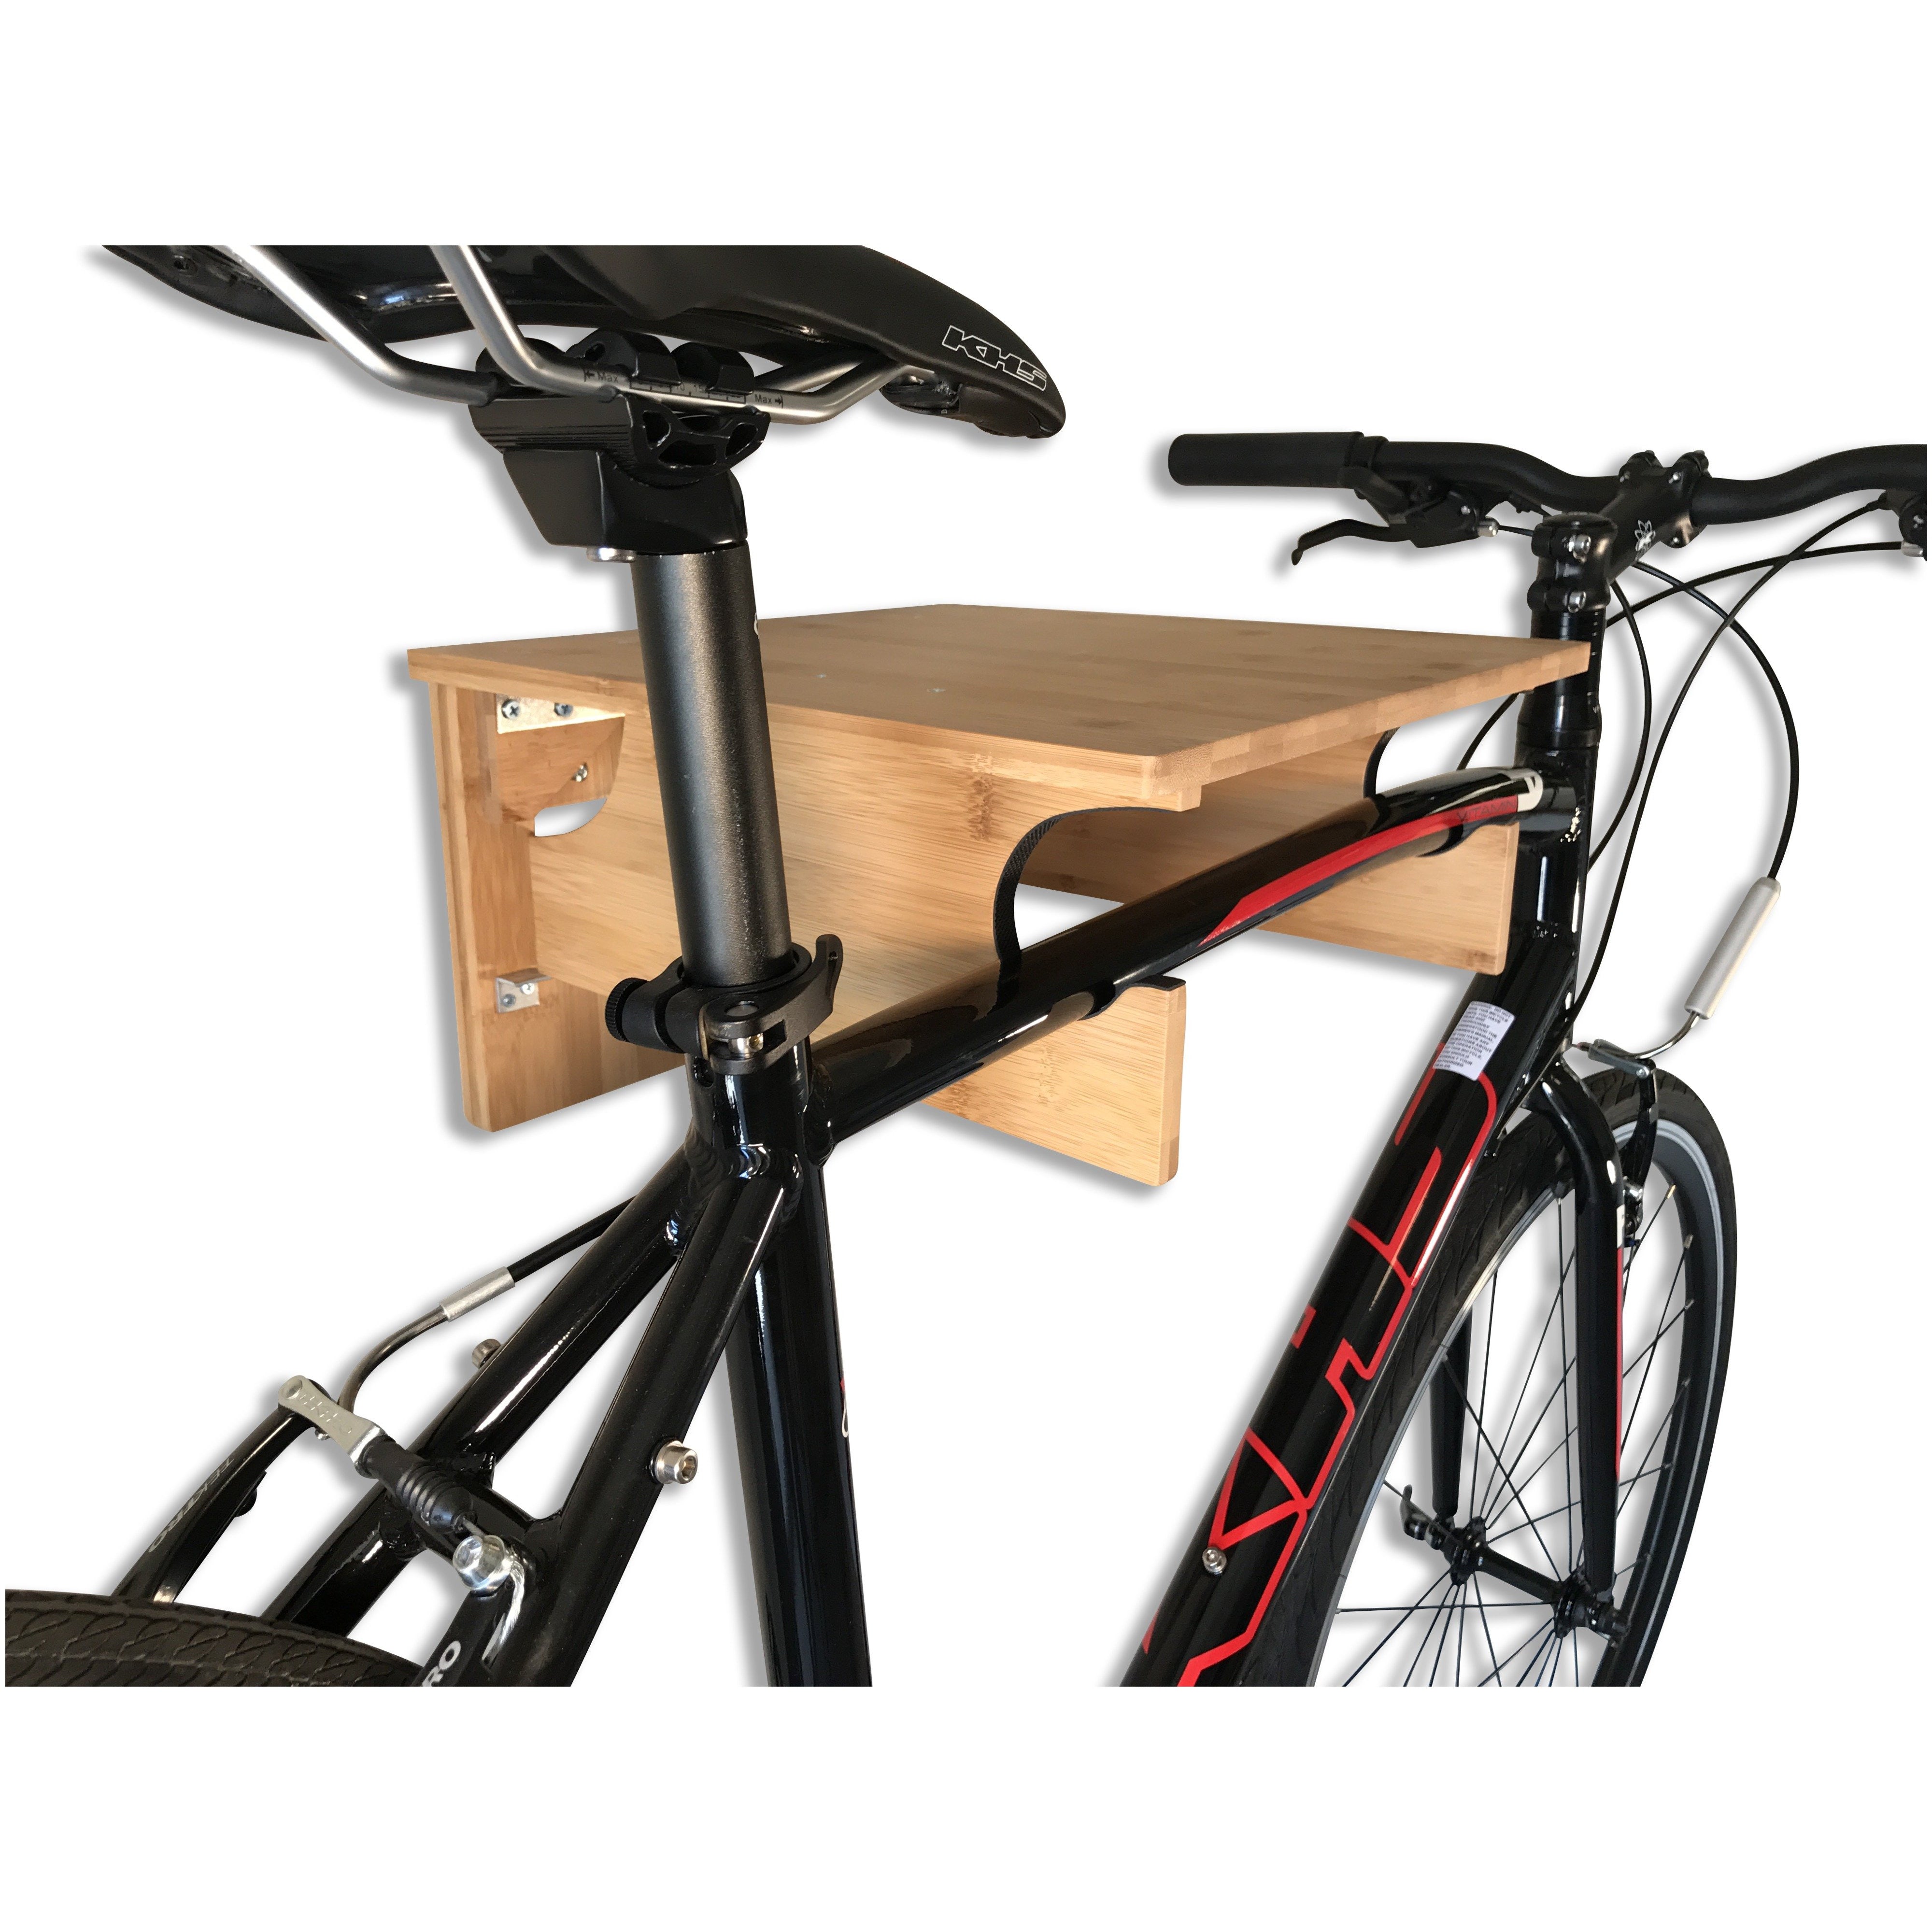 wall bicycle rack